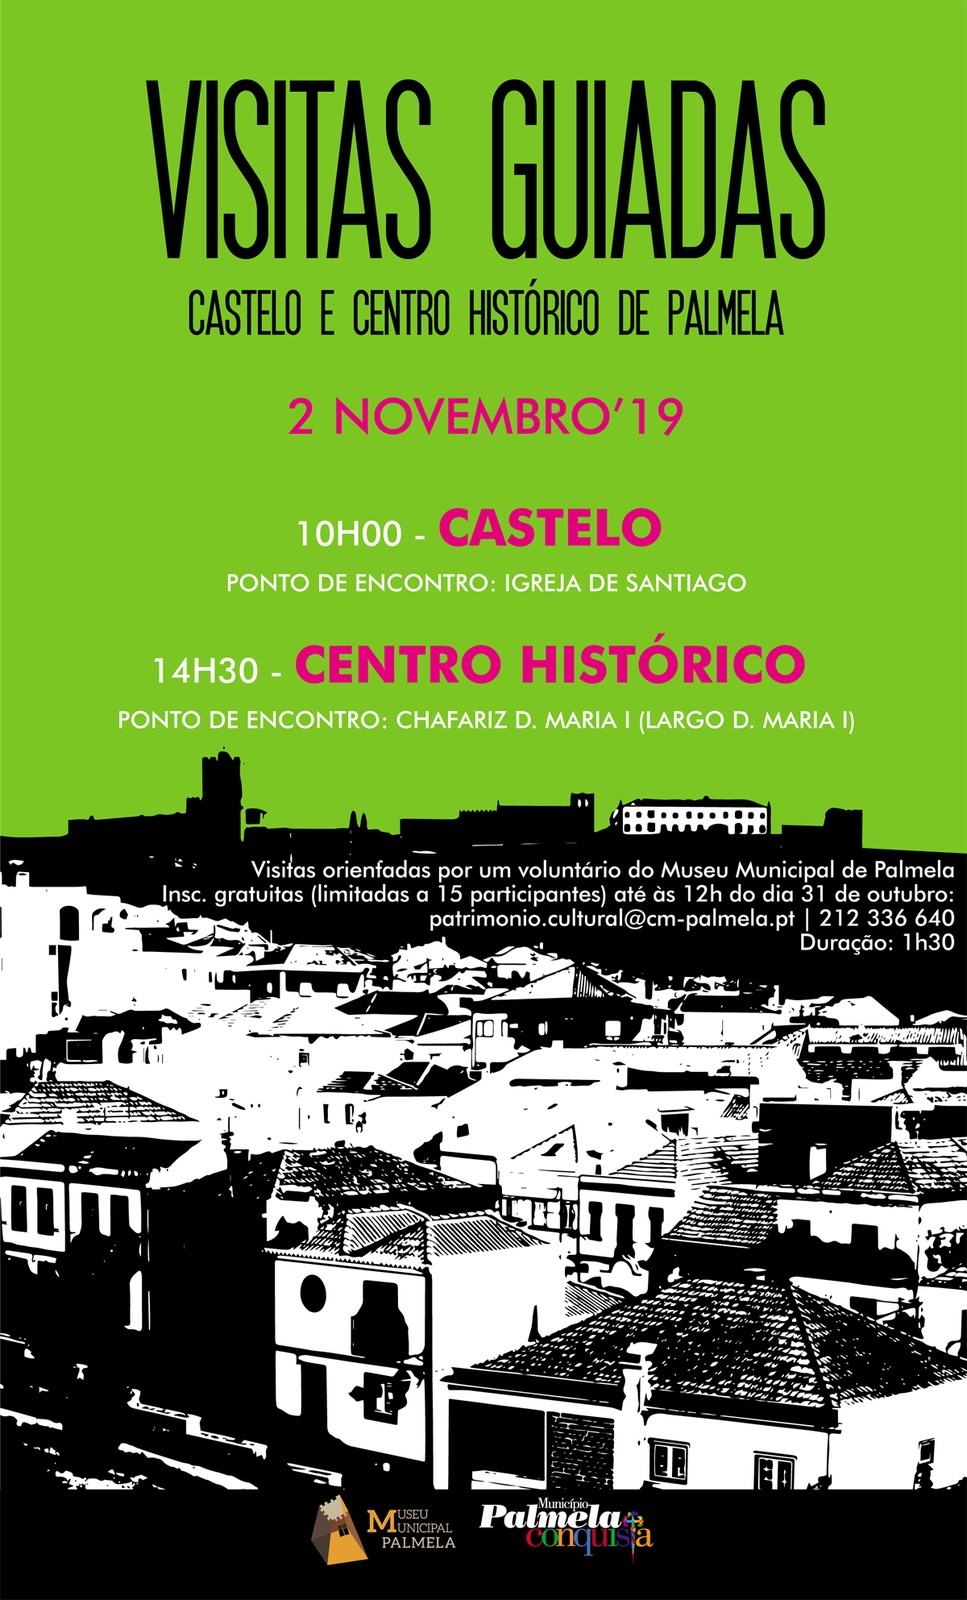 Castelo e Centro Histórico: Visitas Guiadas gratuitas a 2 e 23 de novembro